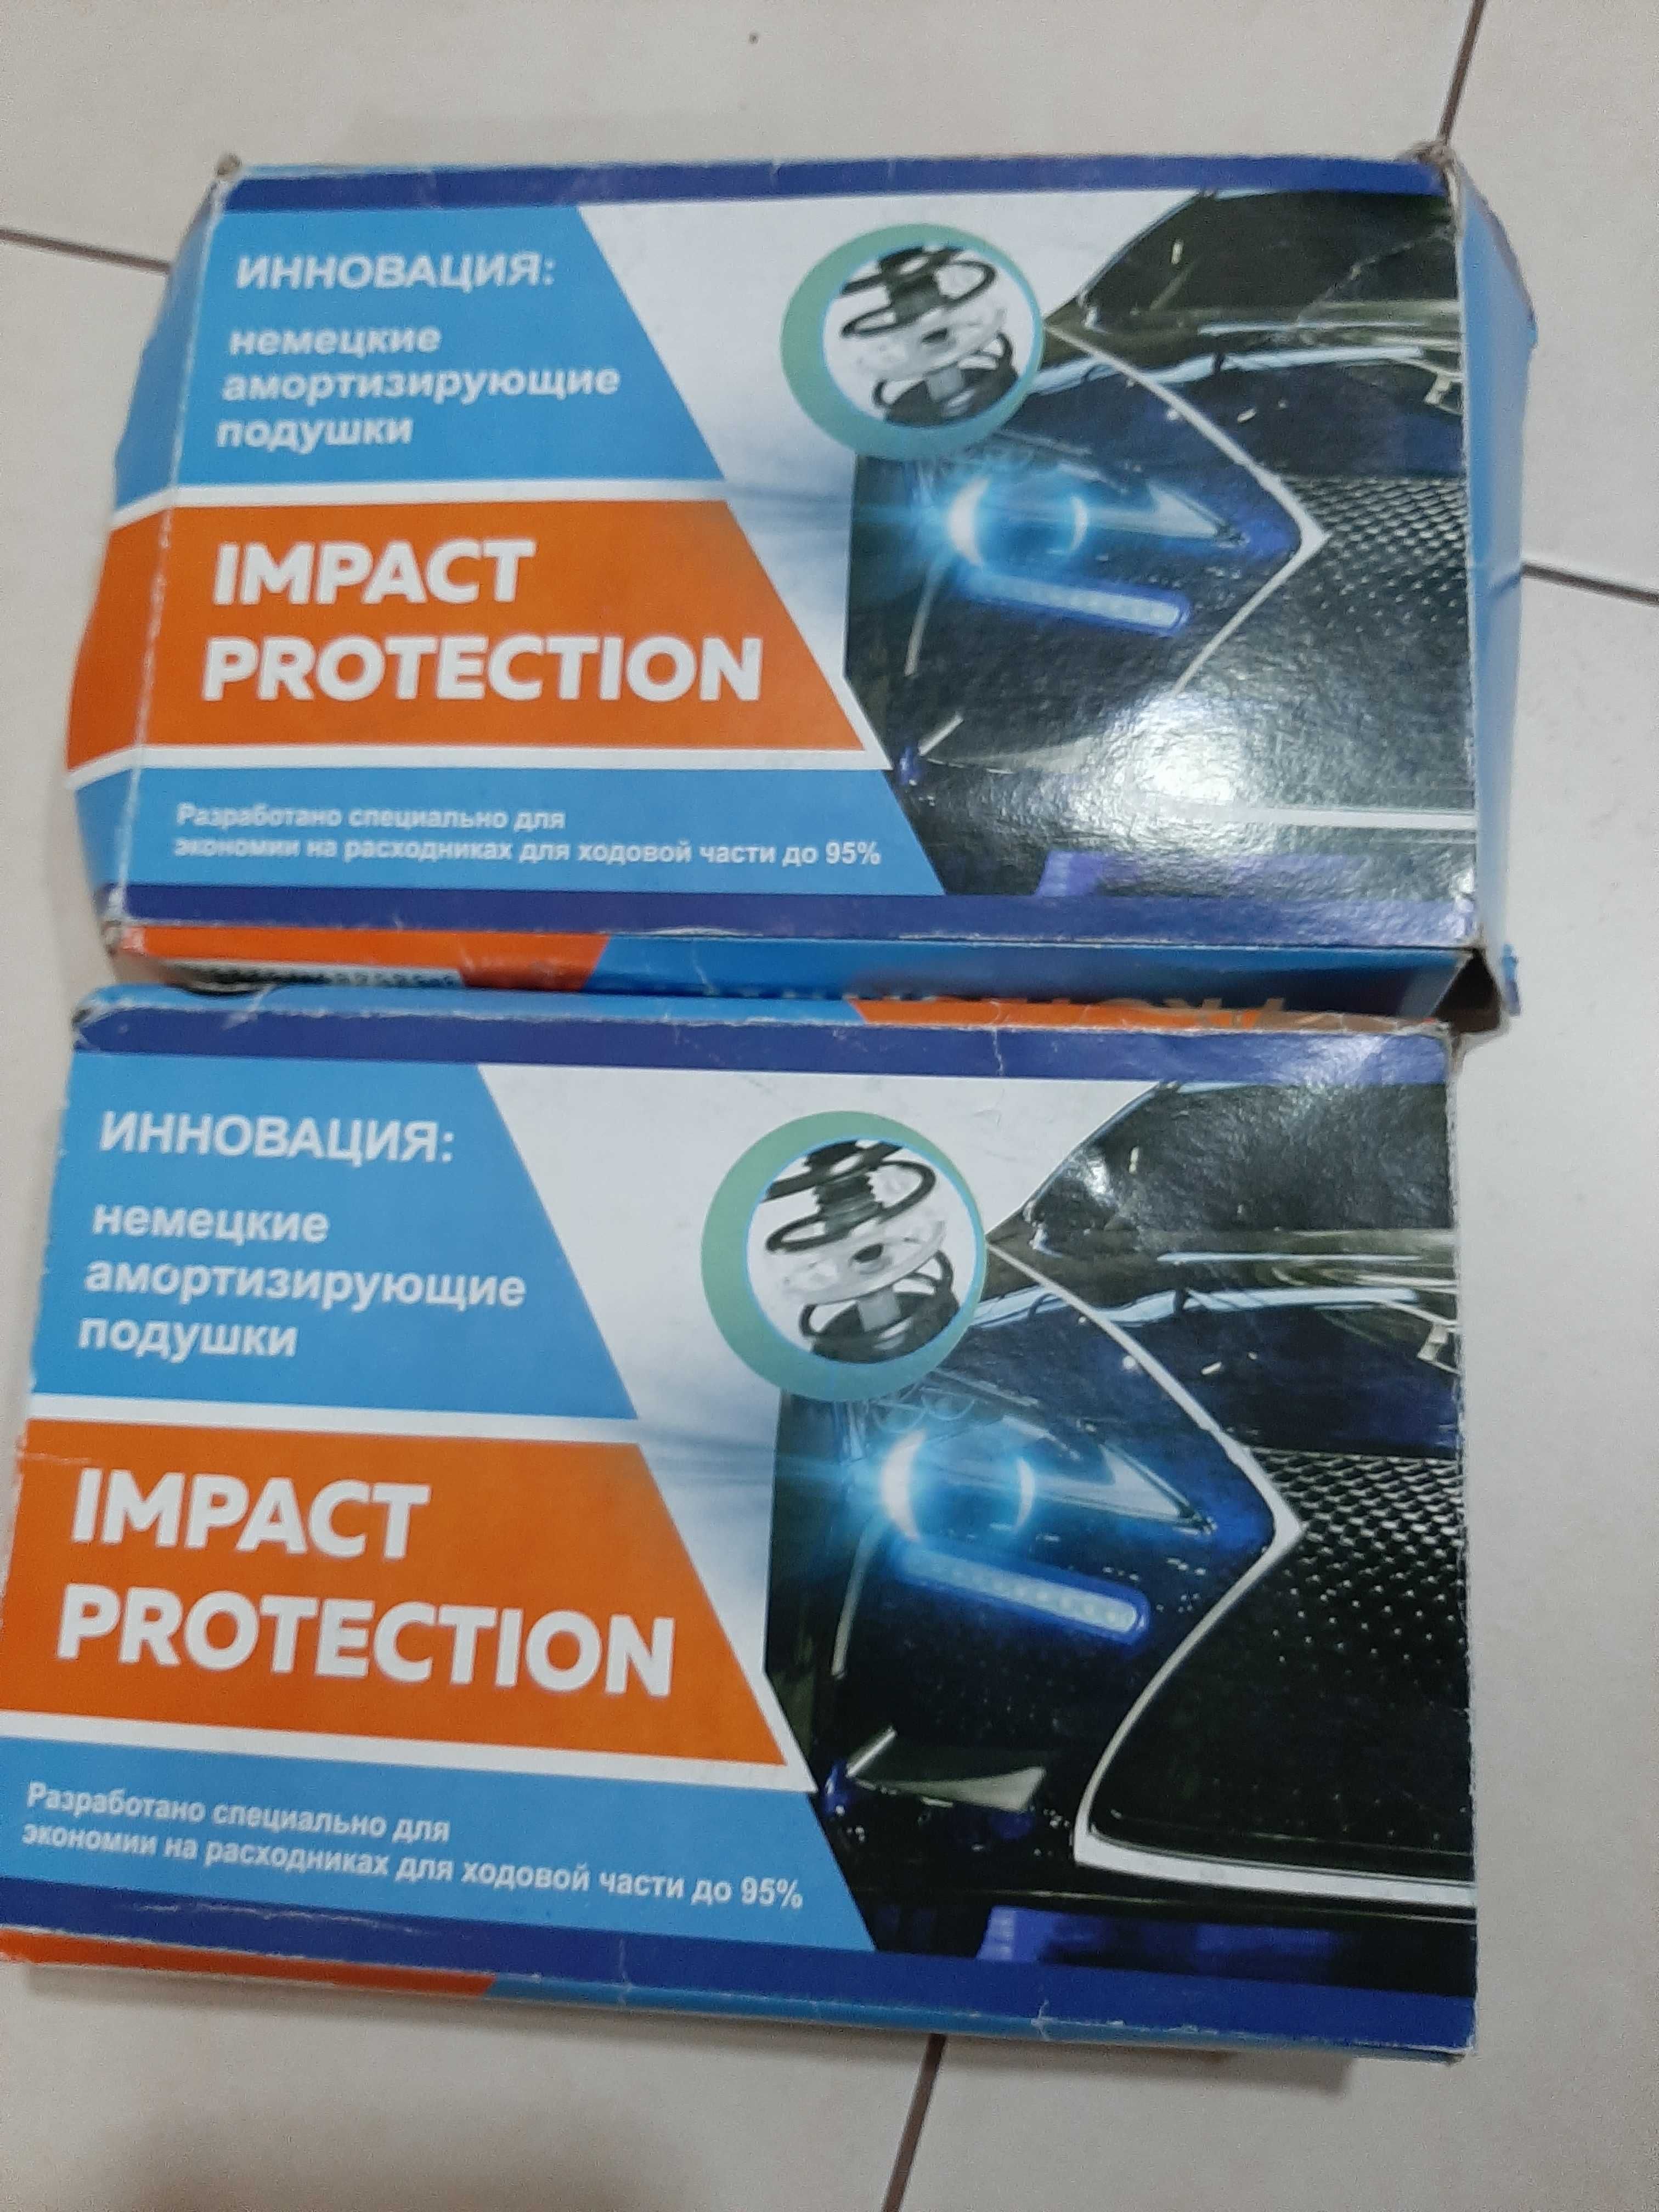 Impact Protection - Немецкі амортизуючі подушки